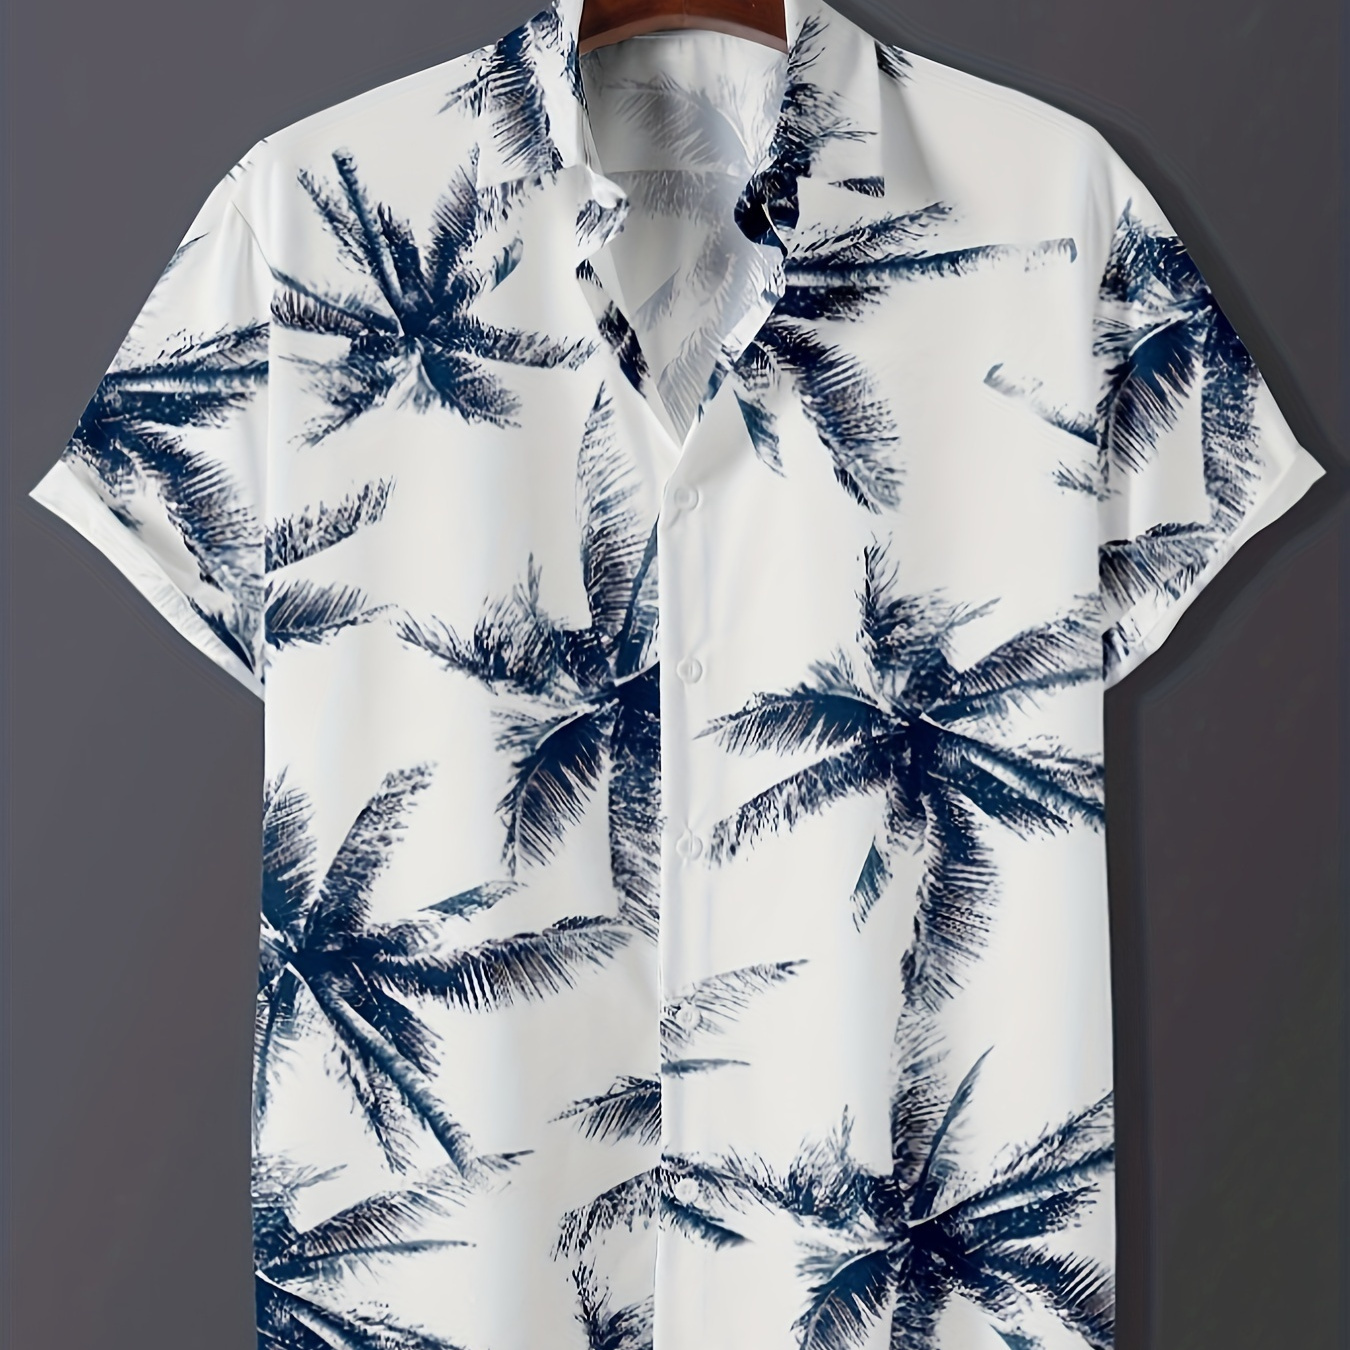 

Men's Fashion Hawaiian Style Shirt, Coconut Trees Pattern Print Short Sleeve Button Up Lapel Shirts For Summer Resort Vacation